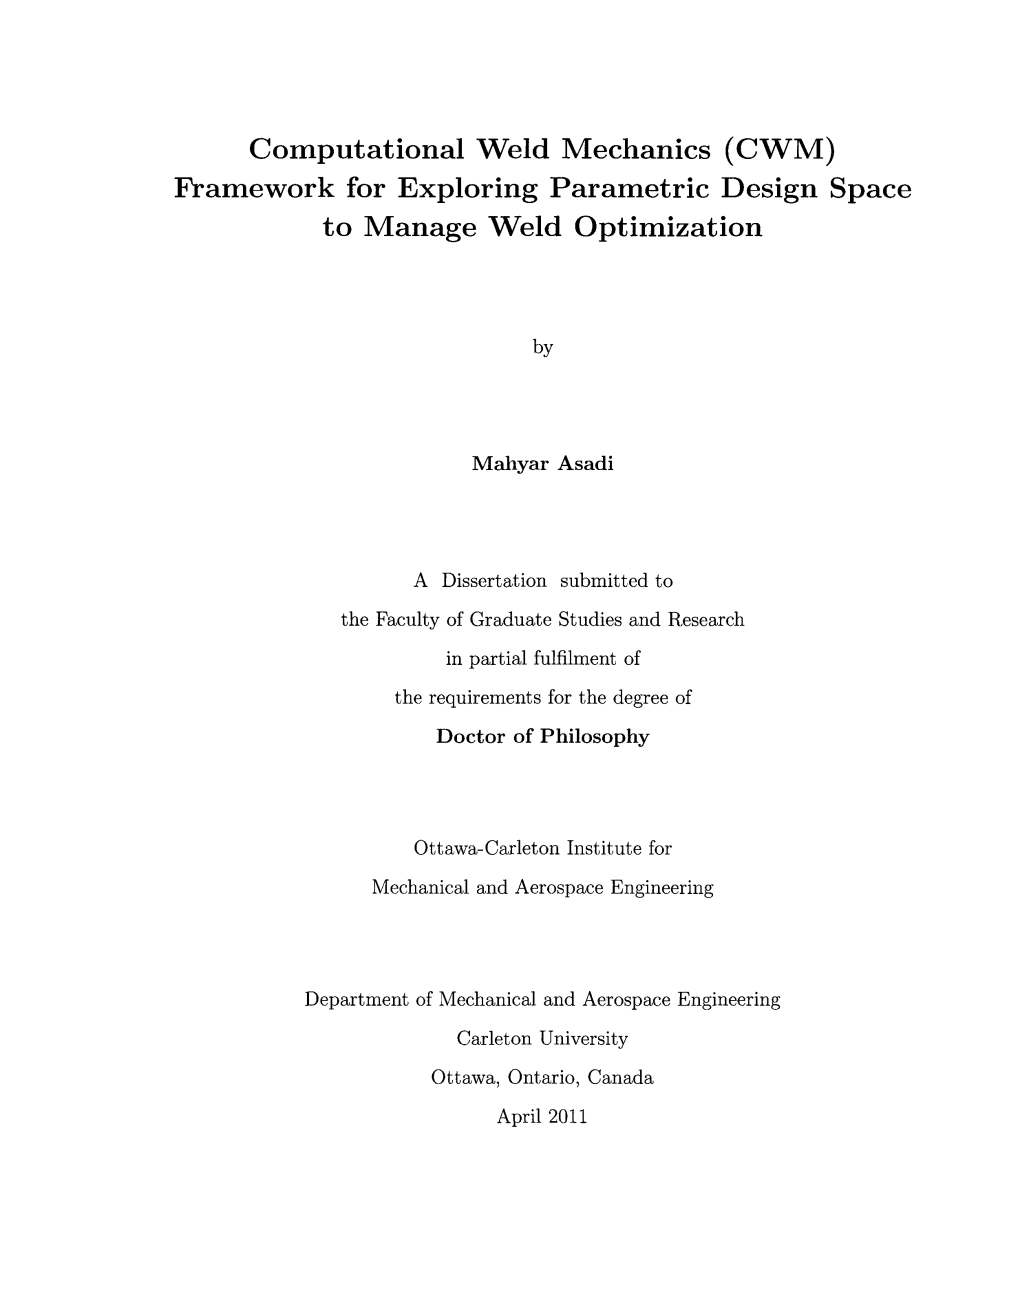 Computational Weld Mechanics (CWM) Framework for Exploring Parametric Design Space to Manage Weld Optimization